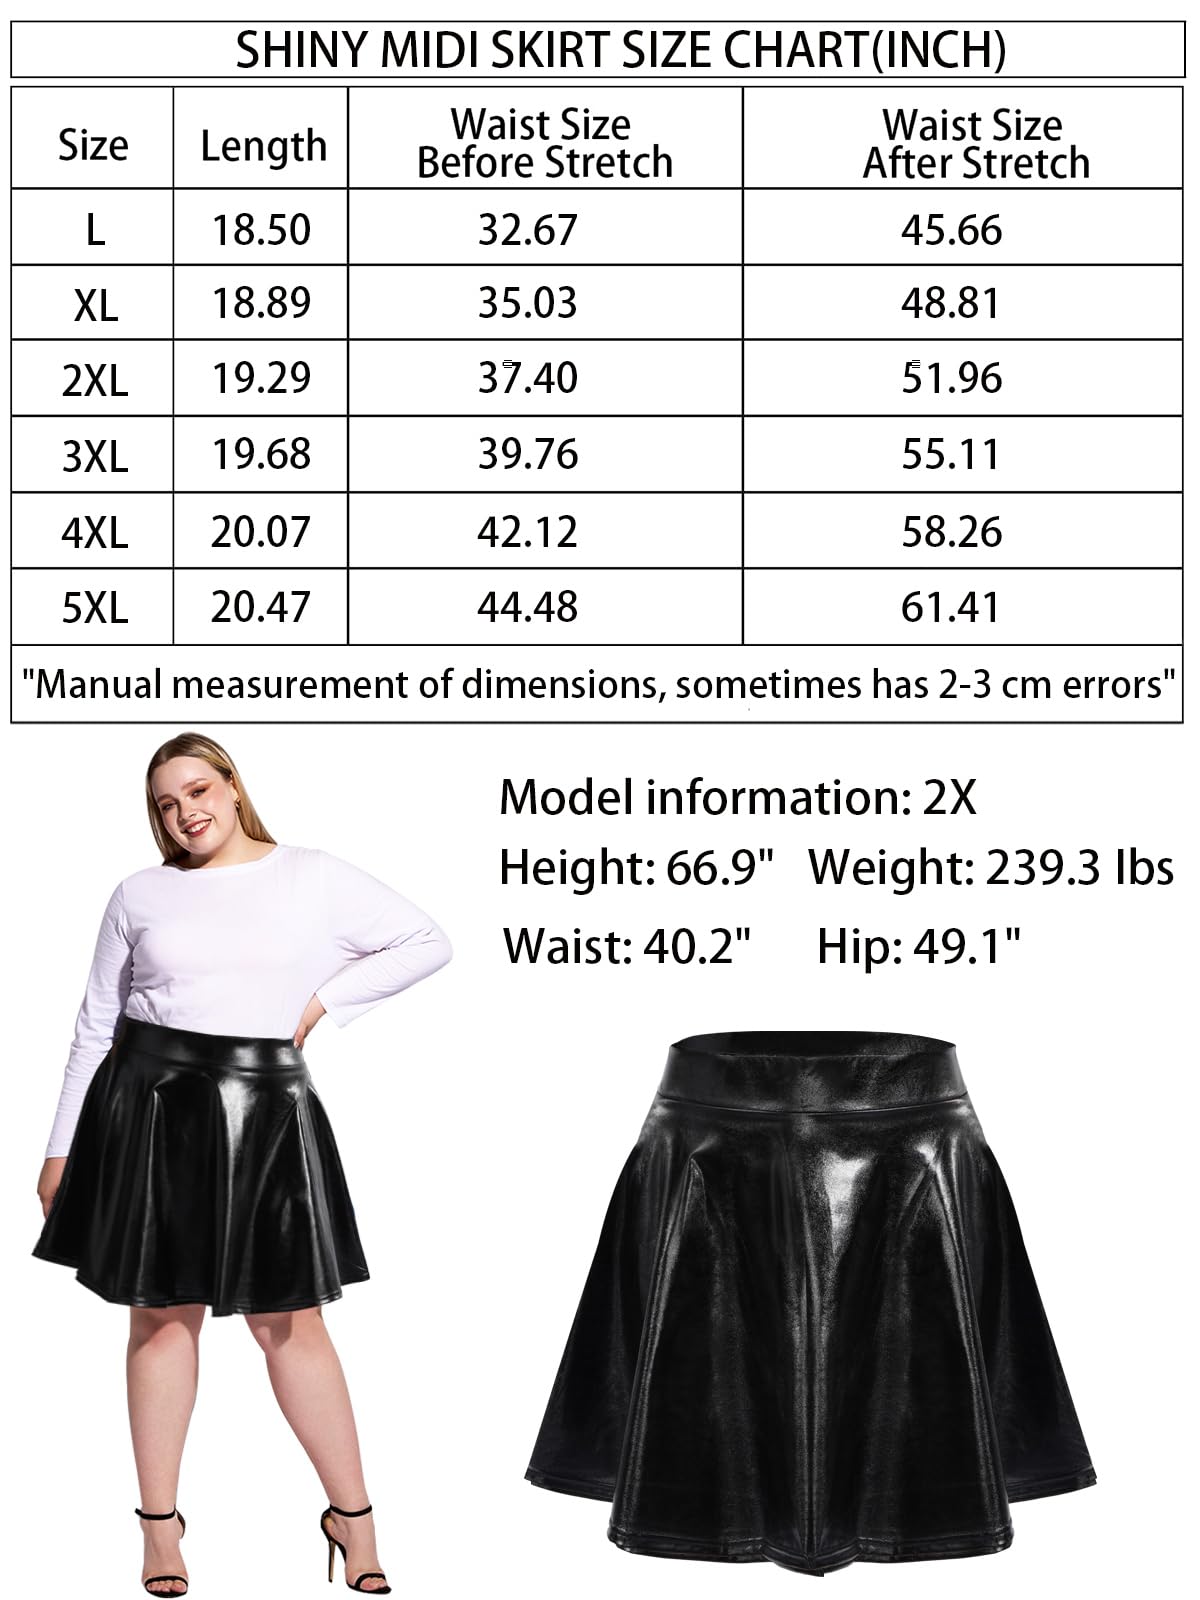 Plus Size Mini Skater Skirt Sparkly Pleated-Black - Moon Wood